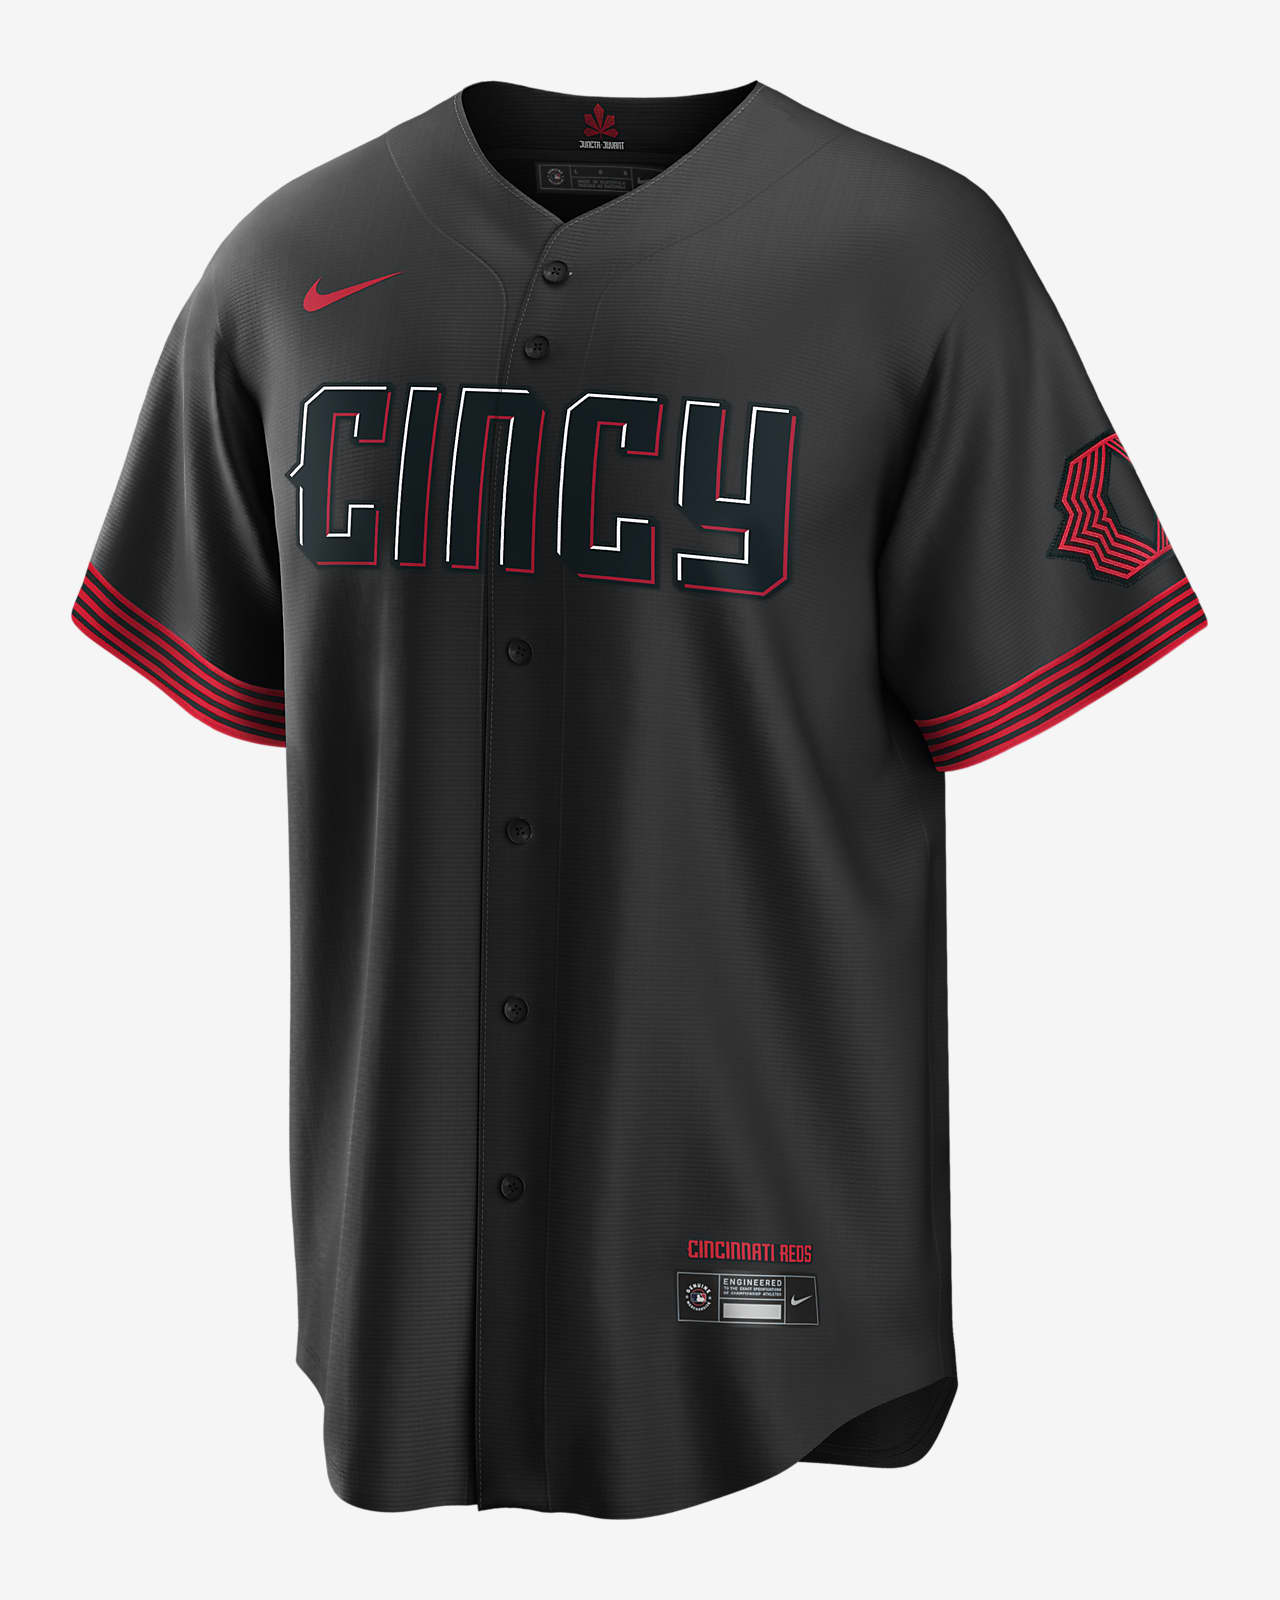 nike custom uniforms baseball